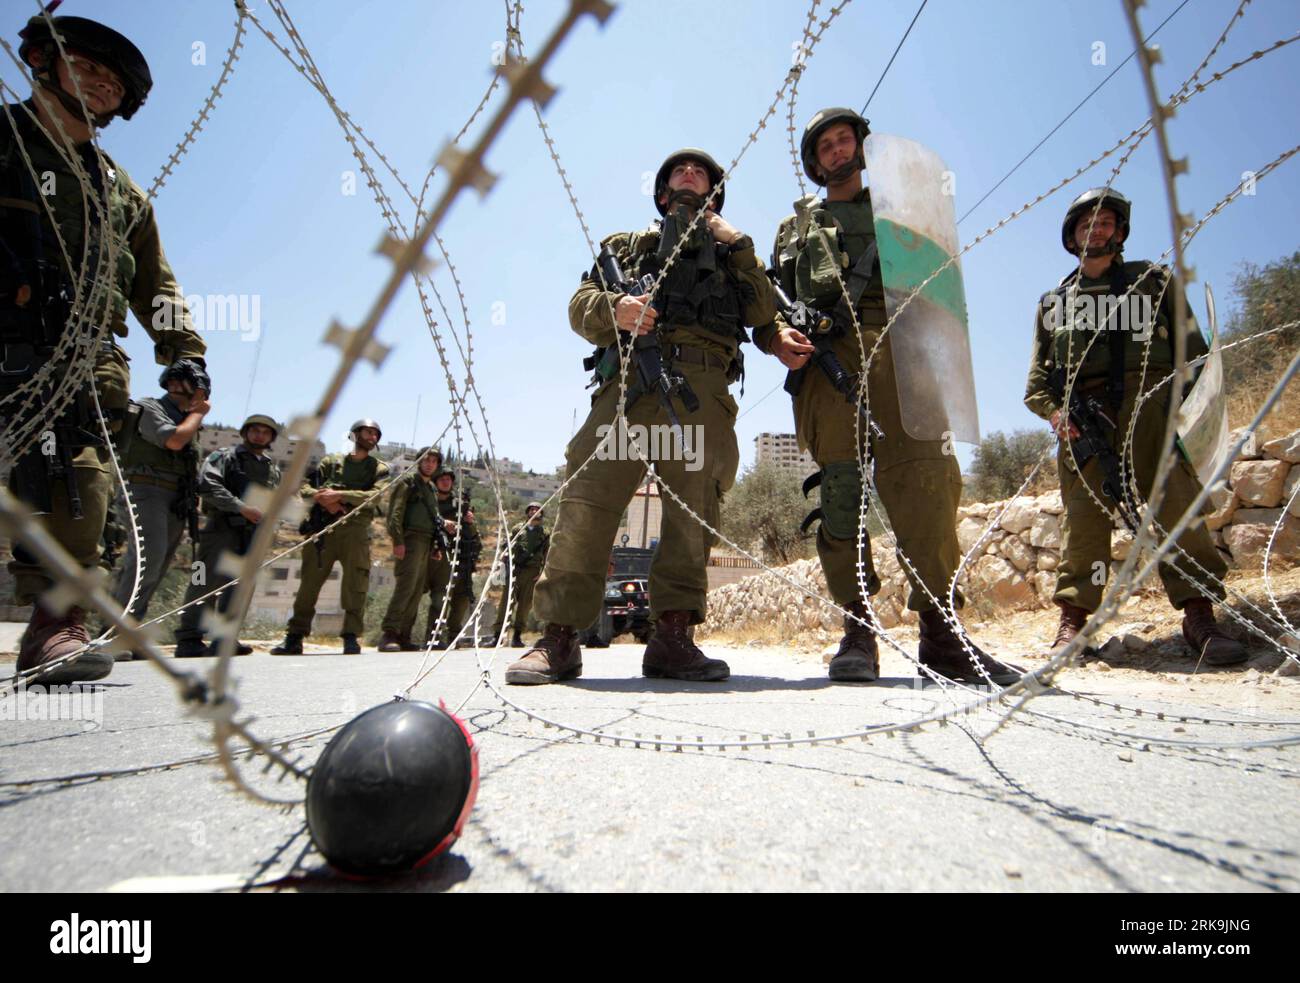 Bildnummer: 54203464  Datum: 04.07.2010  Copyright: imago/Xinhua (100704)-- BETHLEHEM, July 4, 2010 (Xinhua) -- Israeli soldiers take position during a Palestinian demonstration against Israel s separation wall in the West Bank town of Beit Jala near Bethlehem, July 4, 2010. (Xinhua/Luay Sababa)(zl) (1)MIDEAST-BETHLEHEM-DEMONSTRATION PUBLICATIONxNOTxINxCHN Gesellschaft Militär Übung Militärübung kbdig xdp 2010 quer premiumd xint o0 Stacheldraht    Bildnummer 54203464 Date 04 07 2010 Copyright Imago XINHUA  Bethlehem July 4 2010 XINHUA Israeli Soldiers Take Position during a PALESTINIAN Demonst Stock Photo